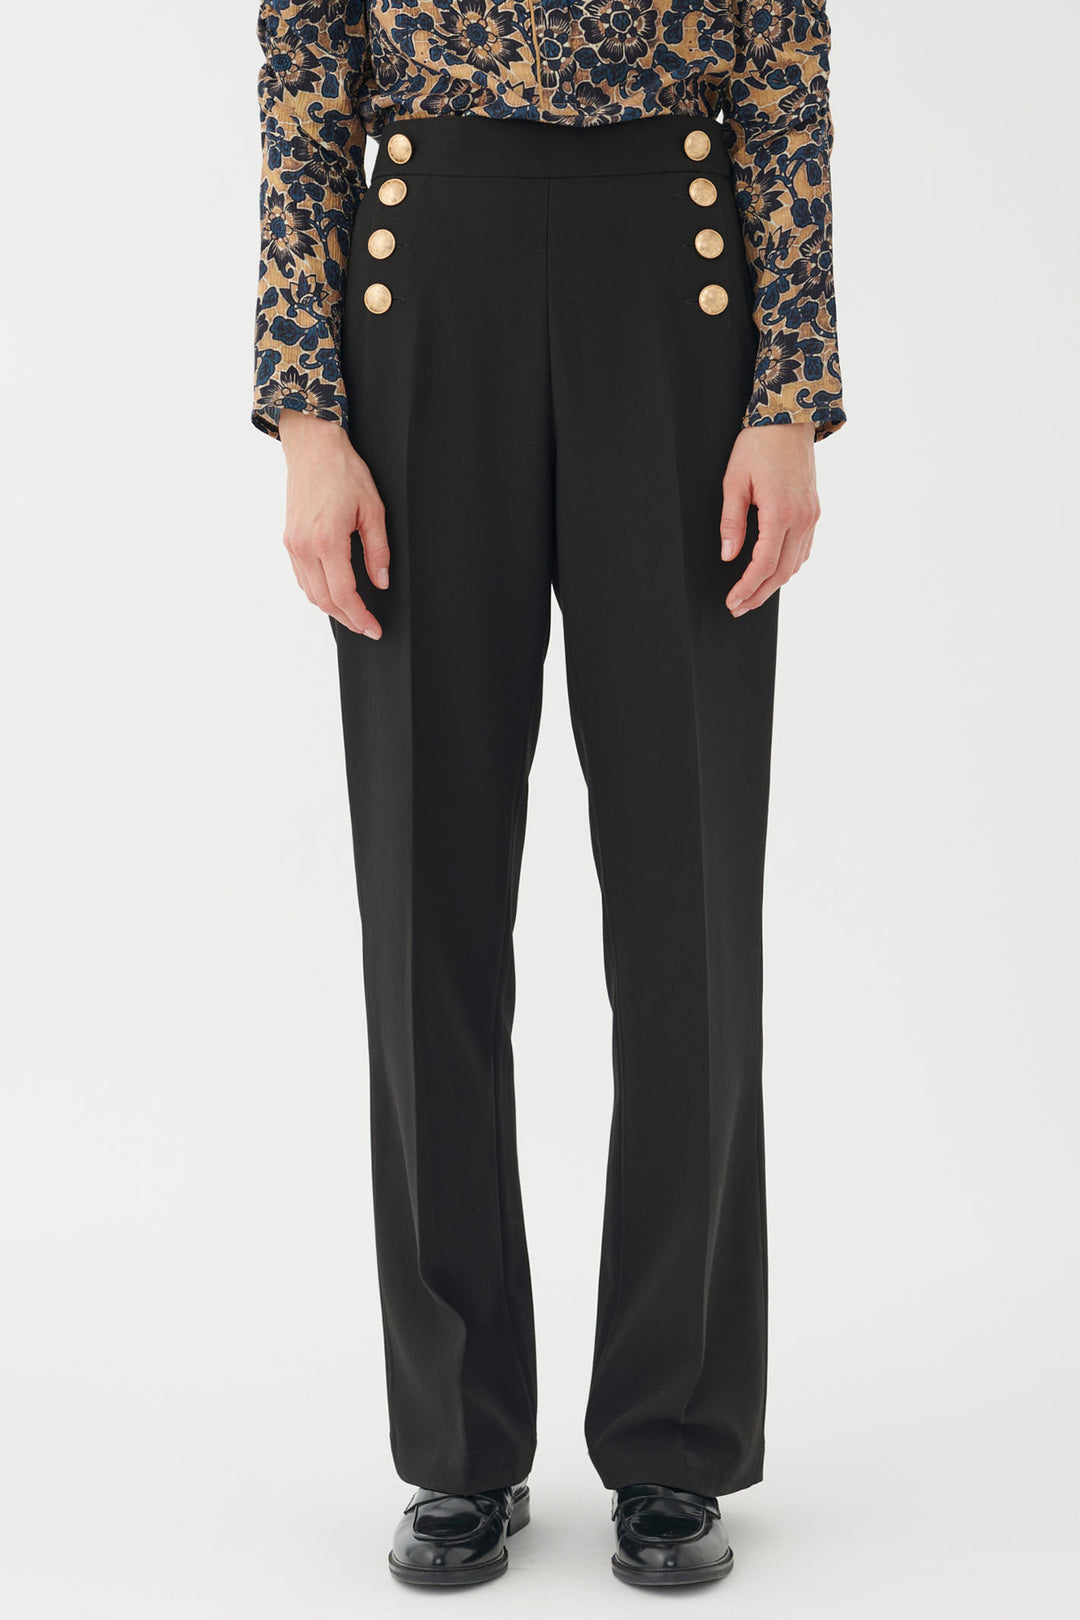 Dea Kudibal Isobeldea Trousers Black Button Detail 0990724 1000 - Olivia Grace Fashion